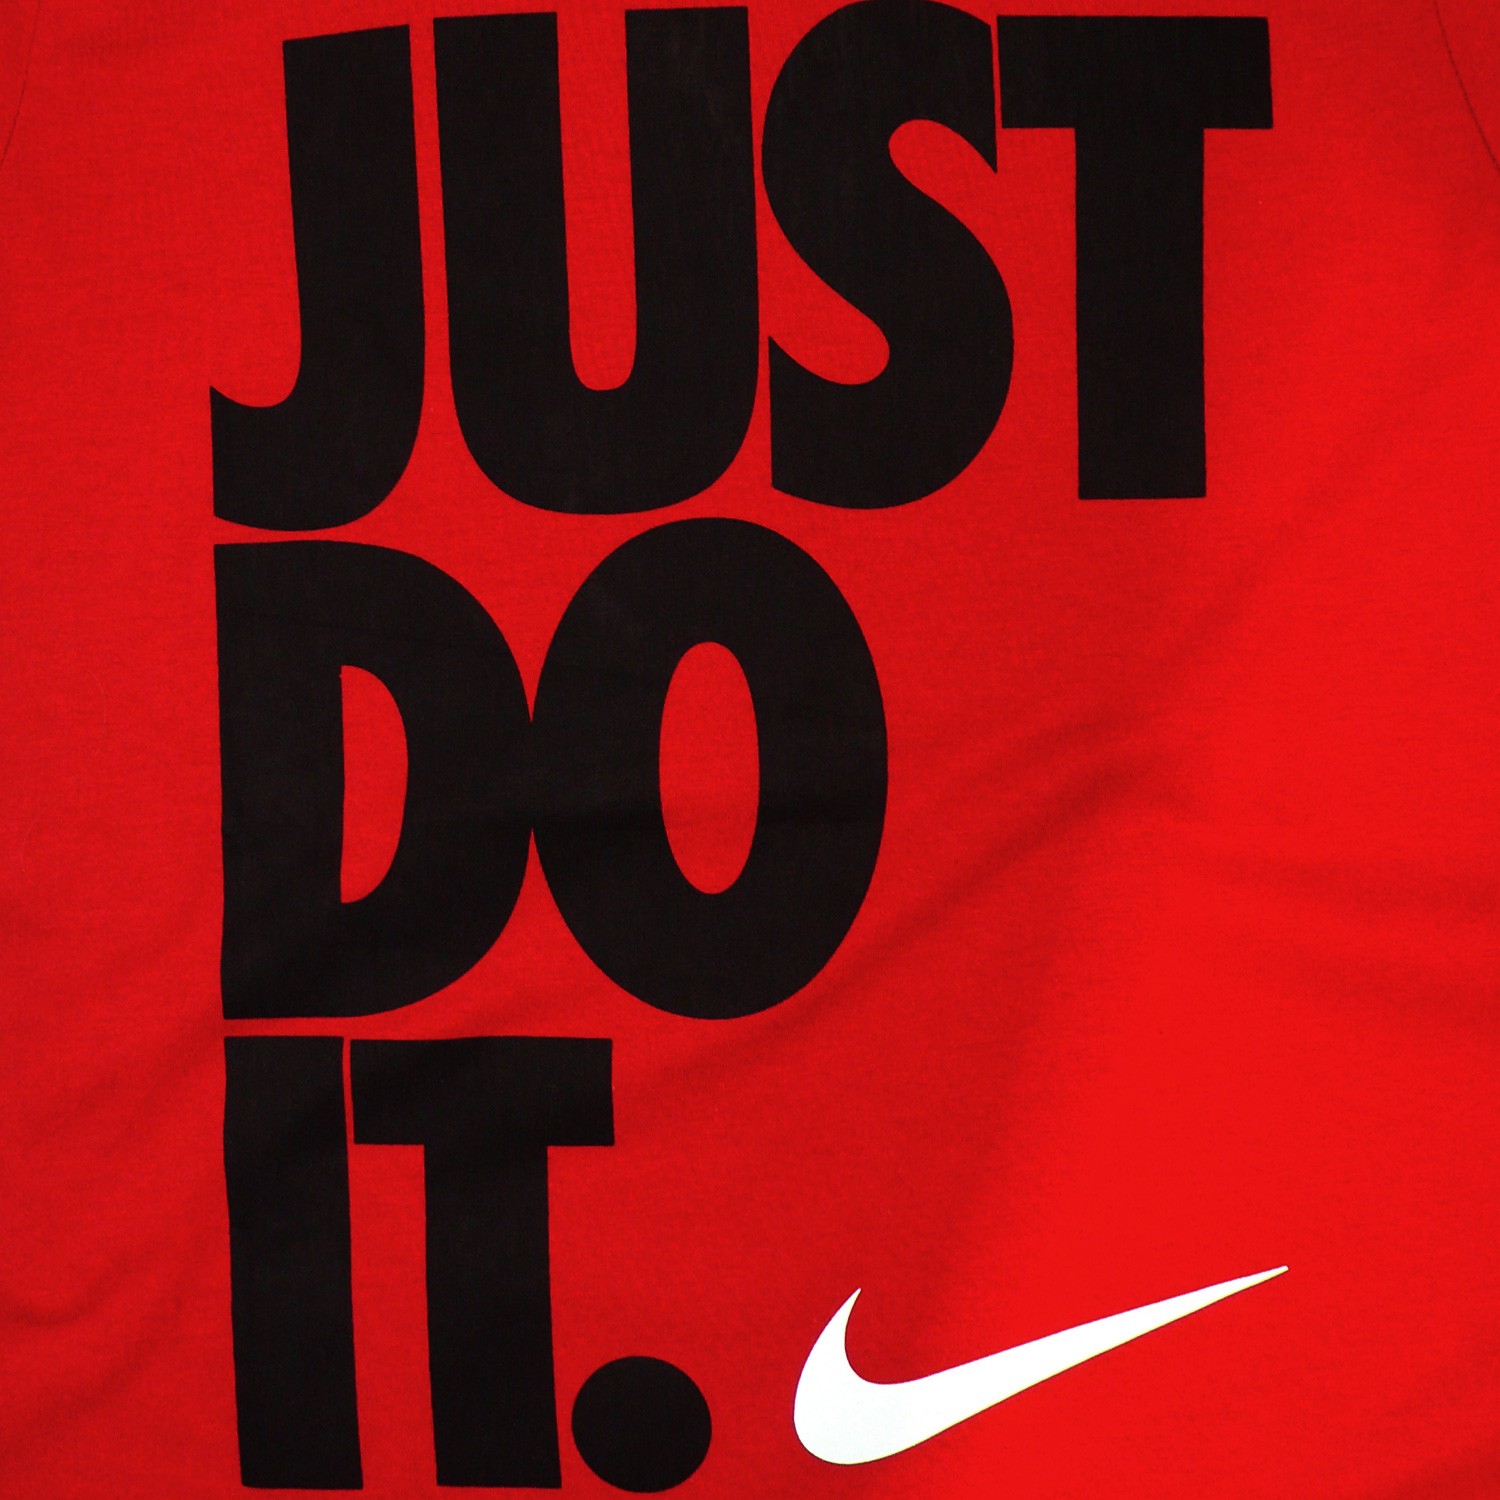 Just do it слоган. Nike just do it лого. Лозунг найк. Just do it логотип. Слоган Nike just do it.